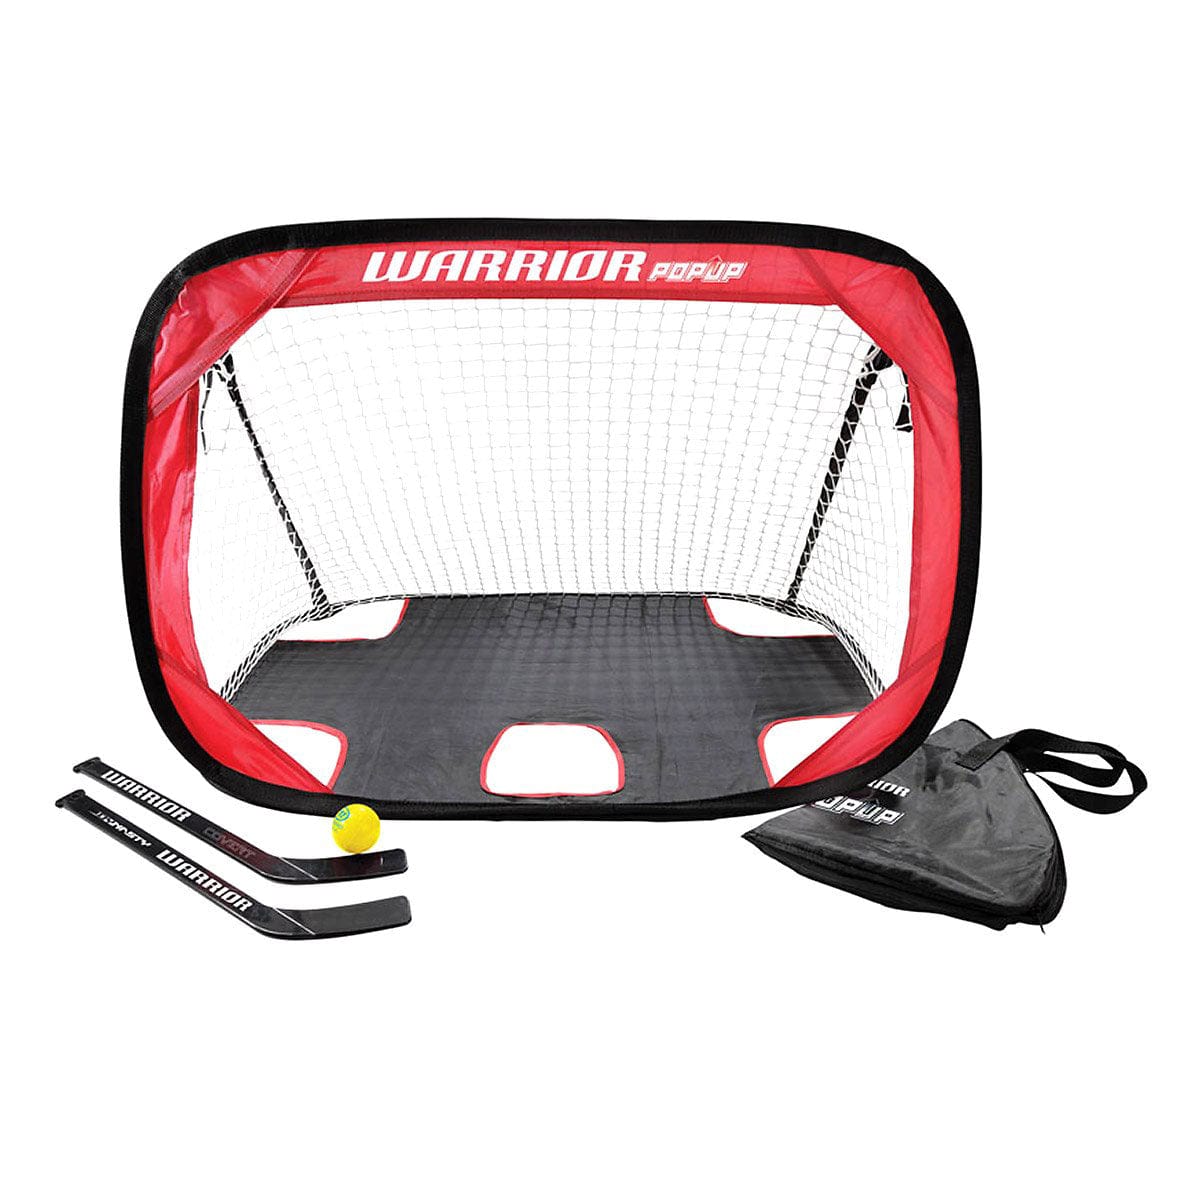 Warrior Mini Hockey Net Set